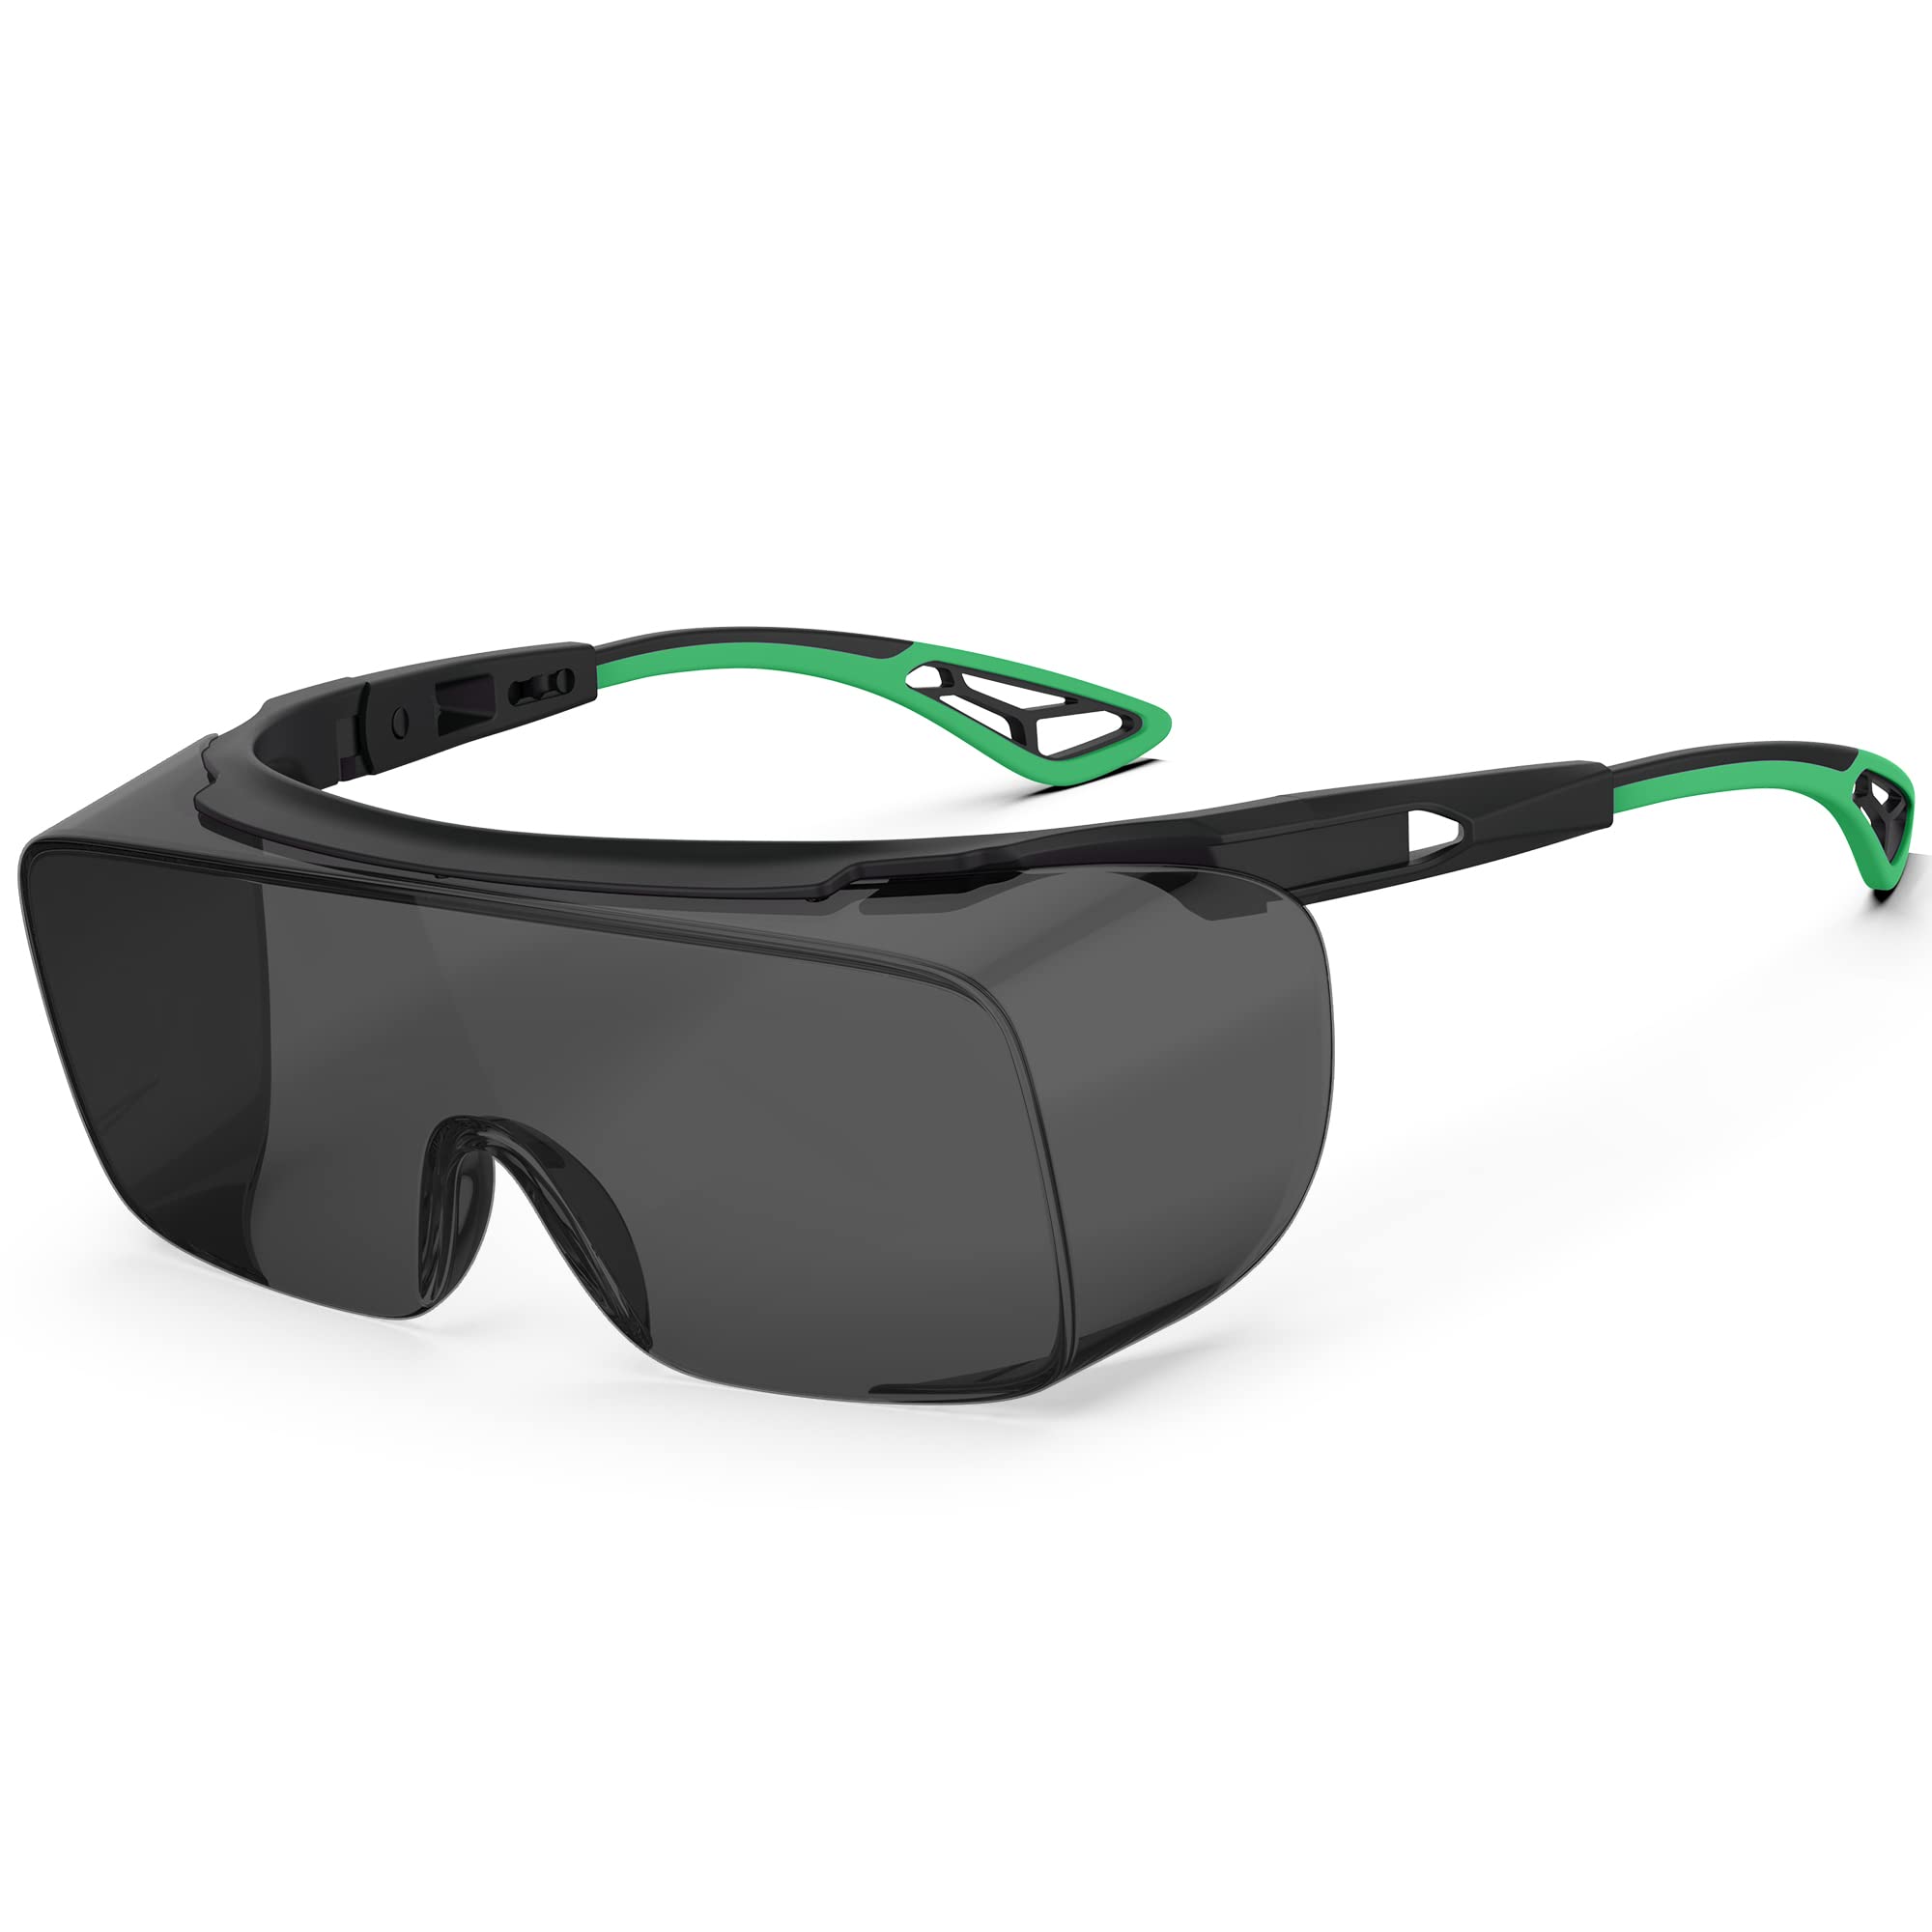 TOREGE Tinted Safety Glasses, Anti Fog Safety Glasses Over Glasses, Welding Glasses With HD Lenses, Medical Lab Goggles For Men(